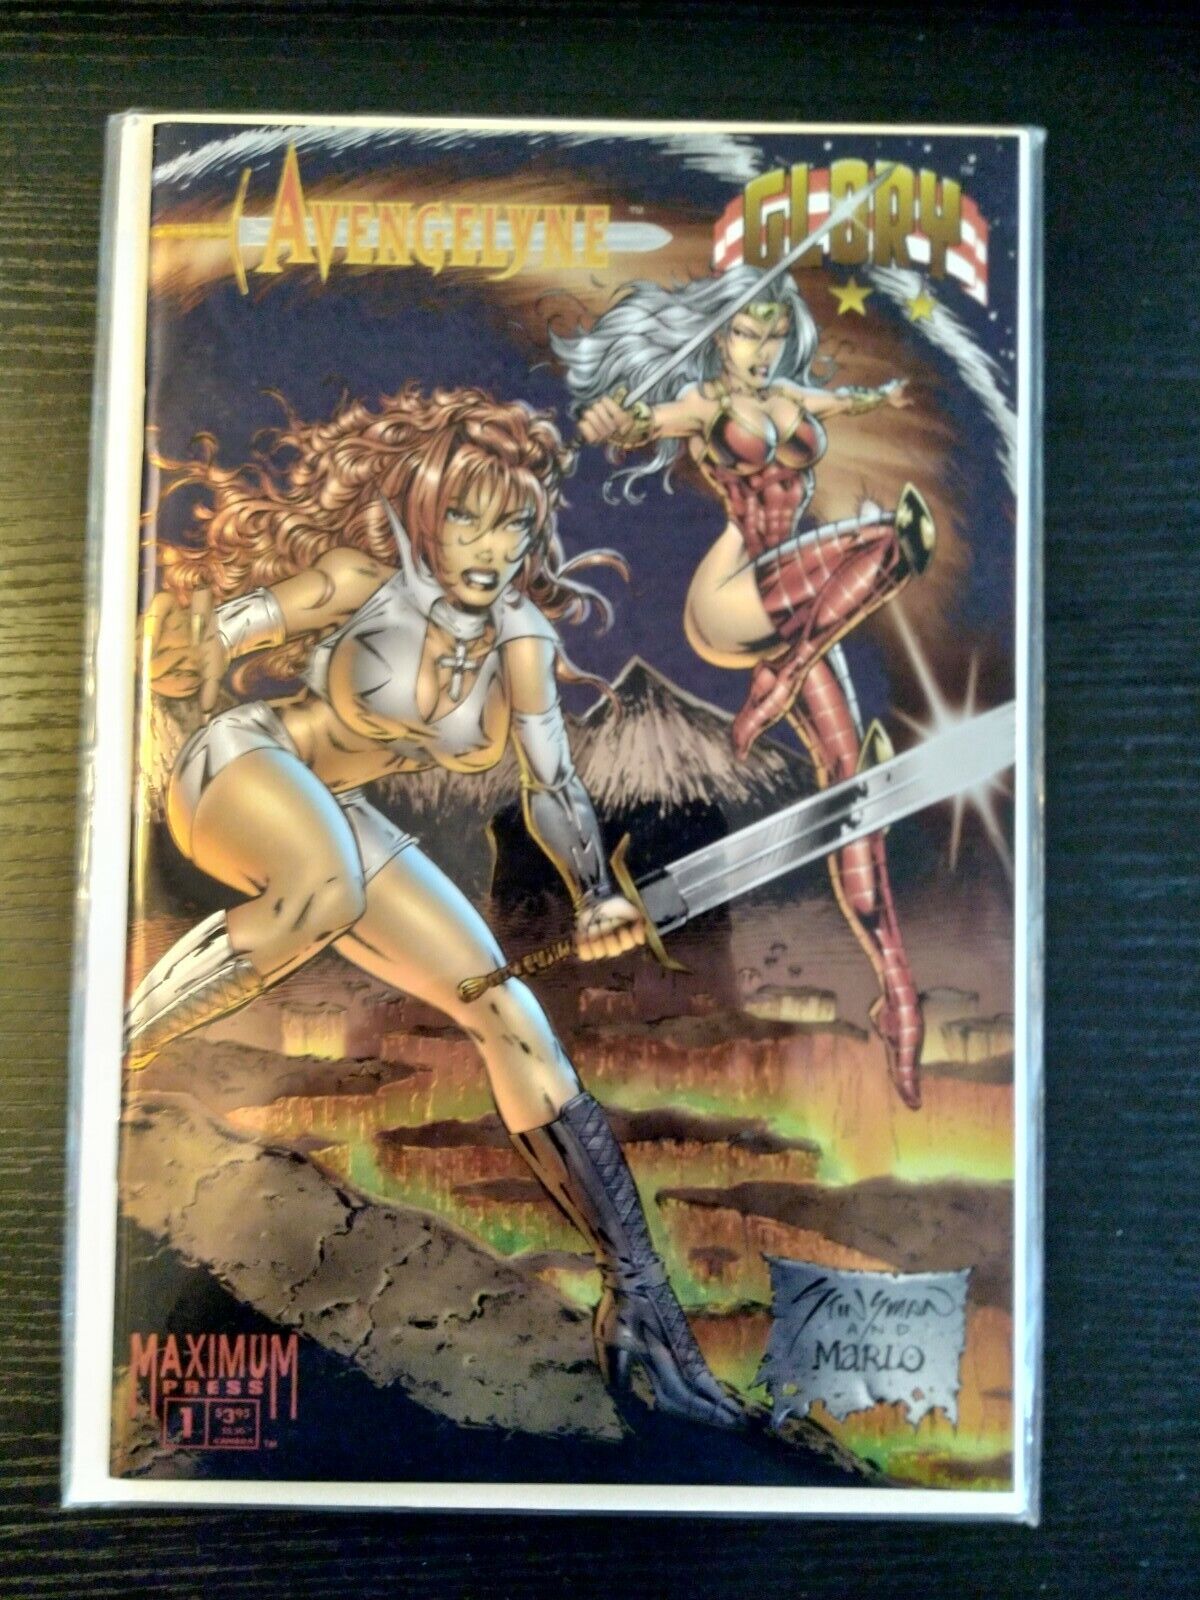 Avengelyne/Glory #1 1995 Image Comics Chrome Foil Wrap Cover High Grade Comic